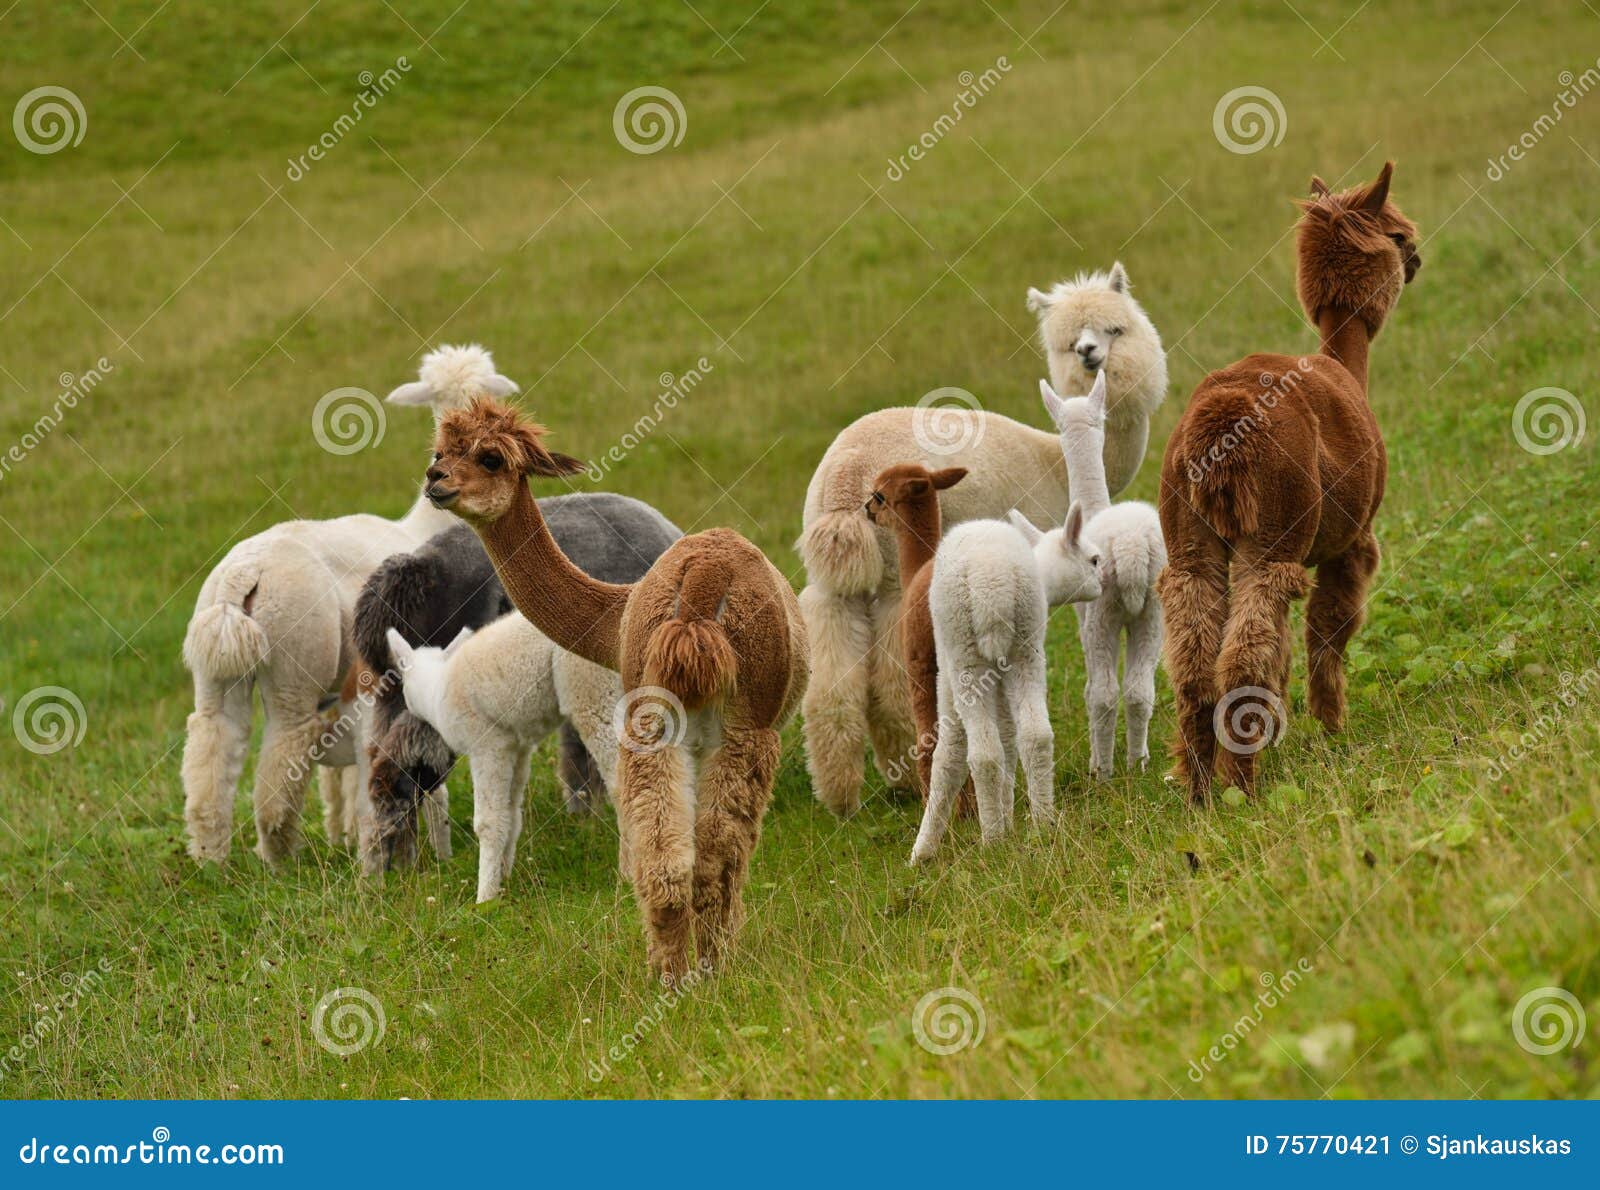 alpacas